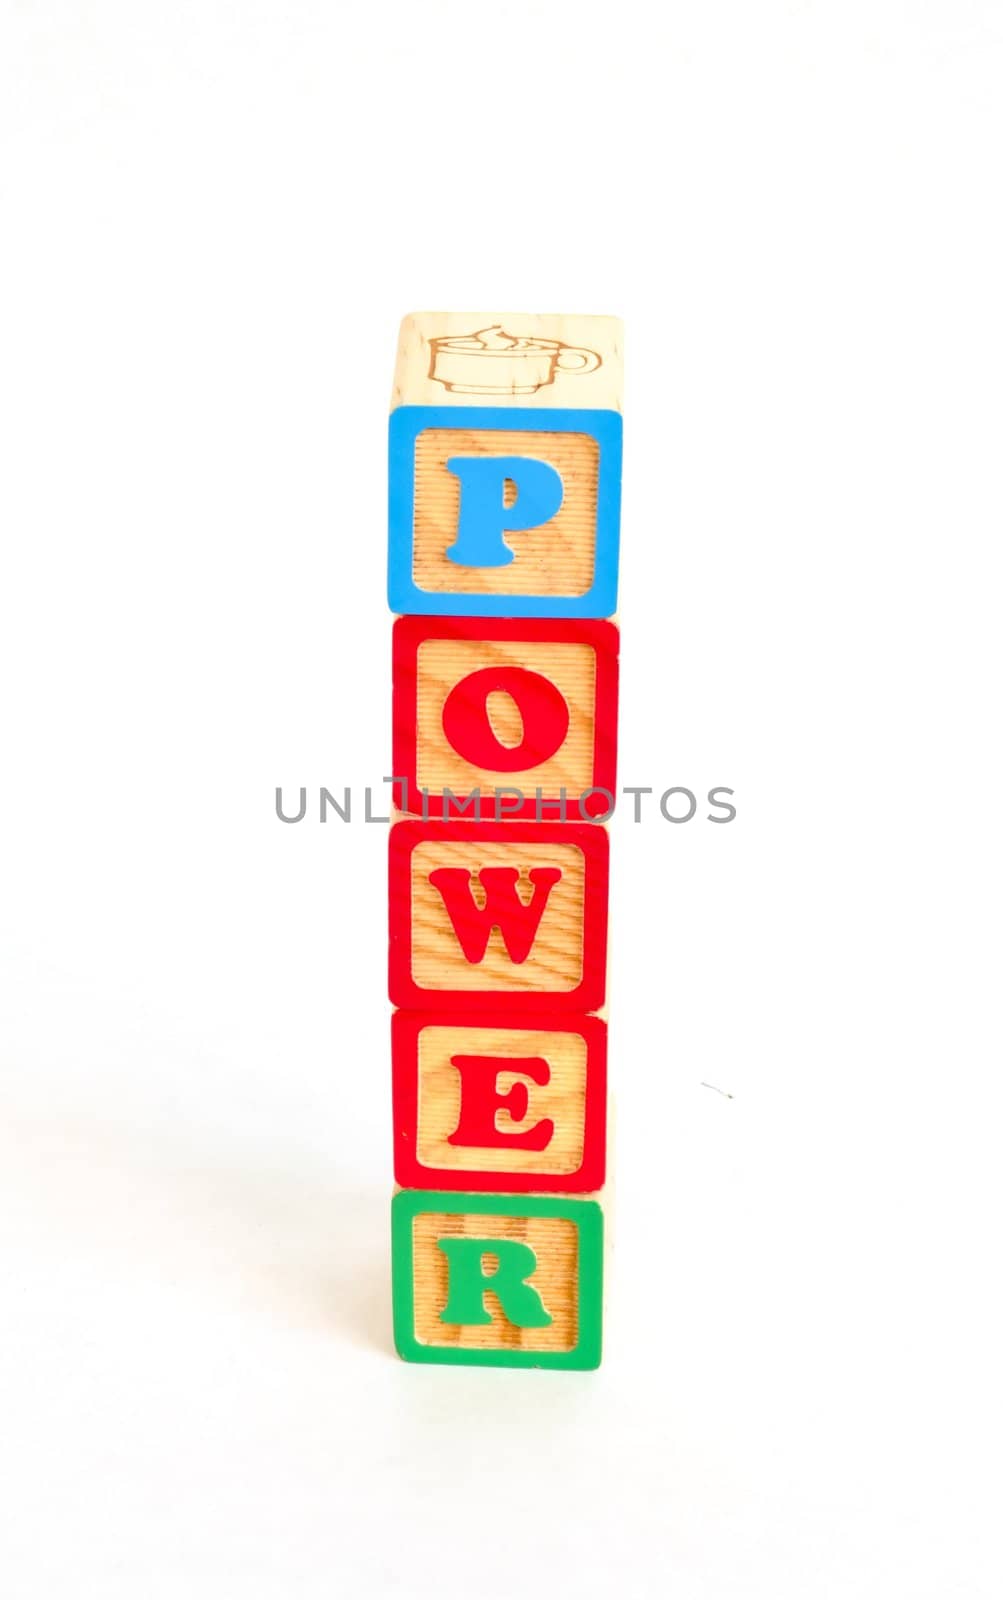 Vintage alphabet blocks spelling out Power